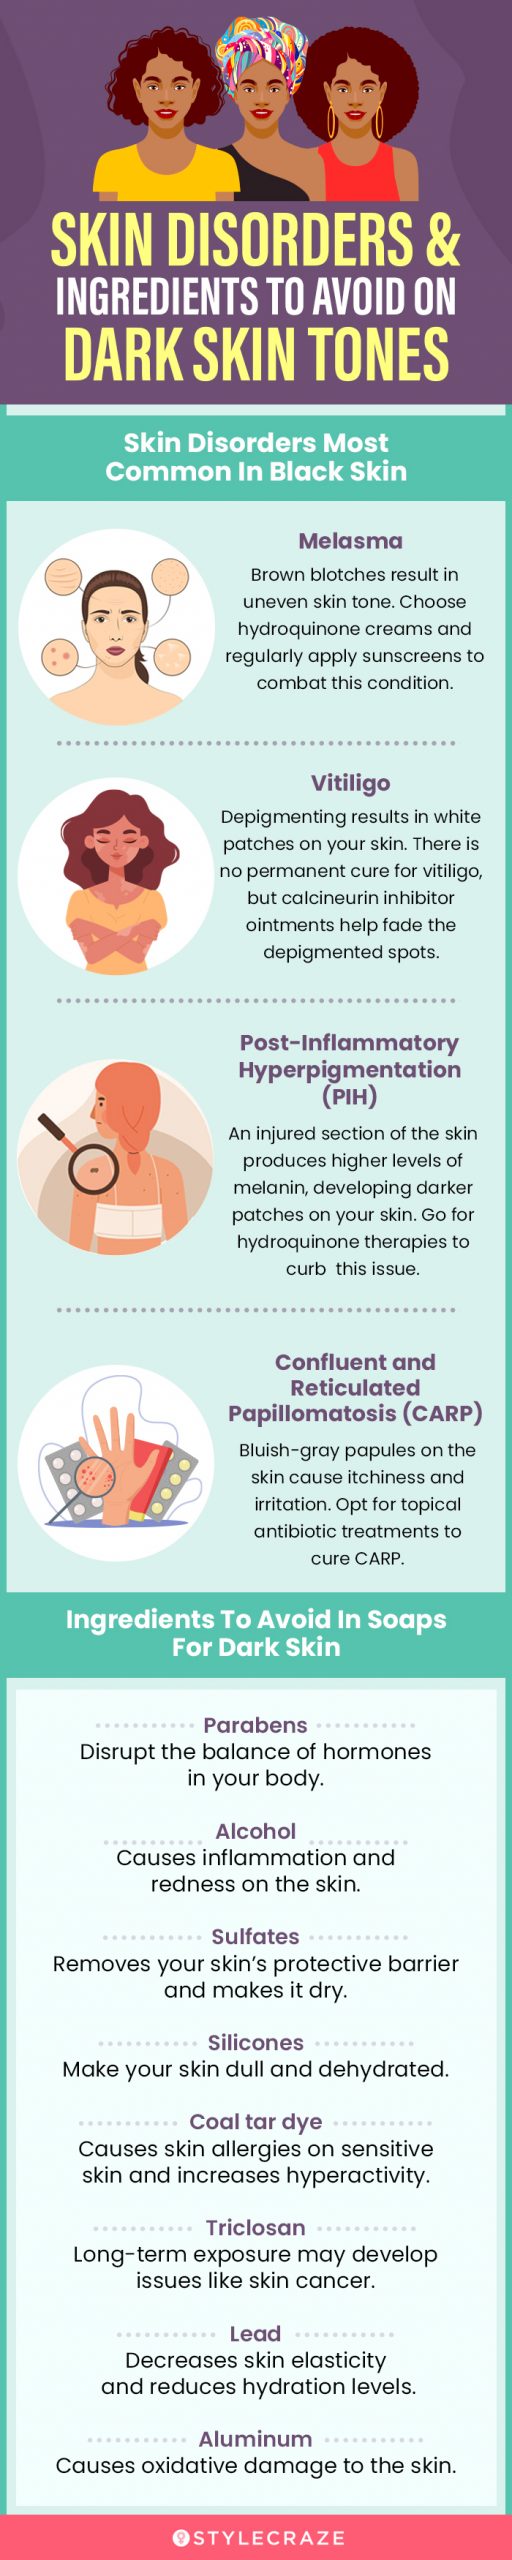 Ingredients To Avoid On Dark Skin Tones (infographic)